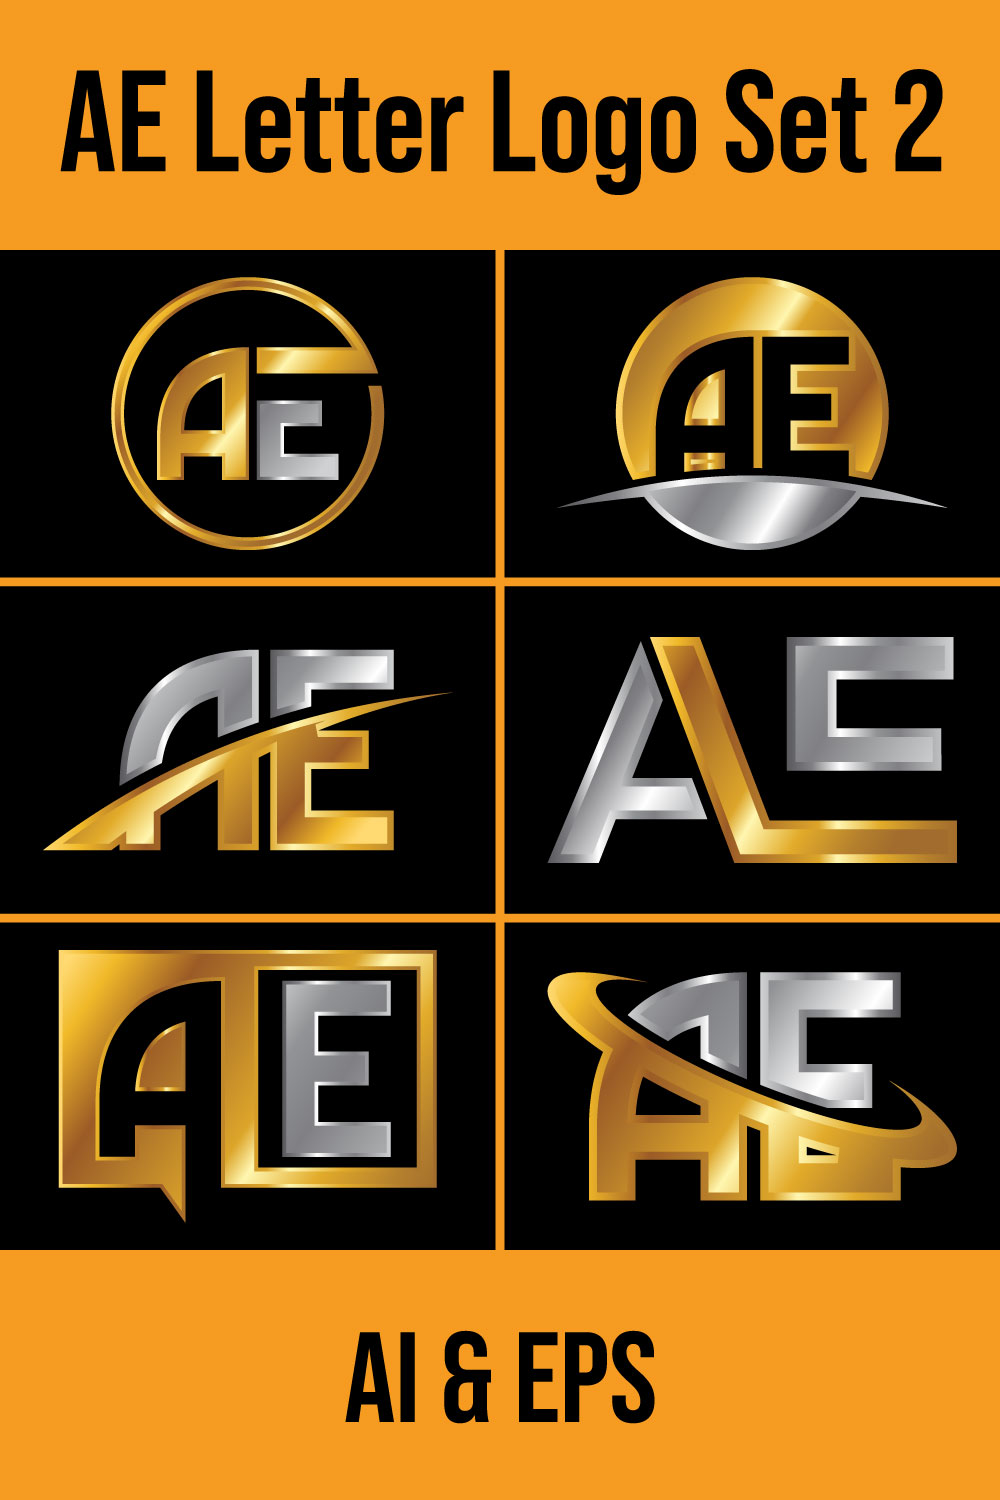 A E Initial Letter Logo Design pinterest image.